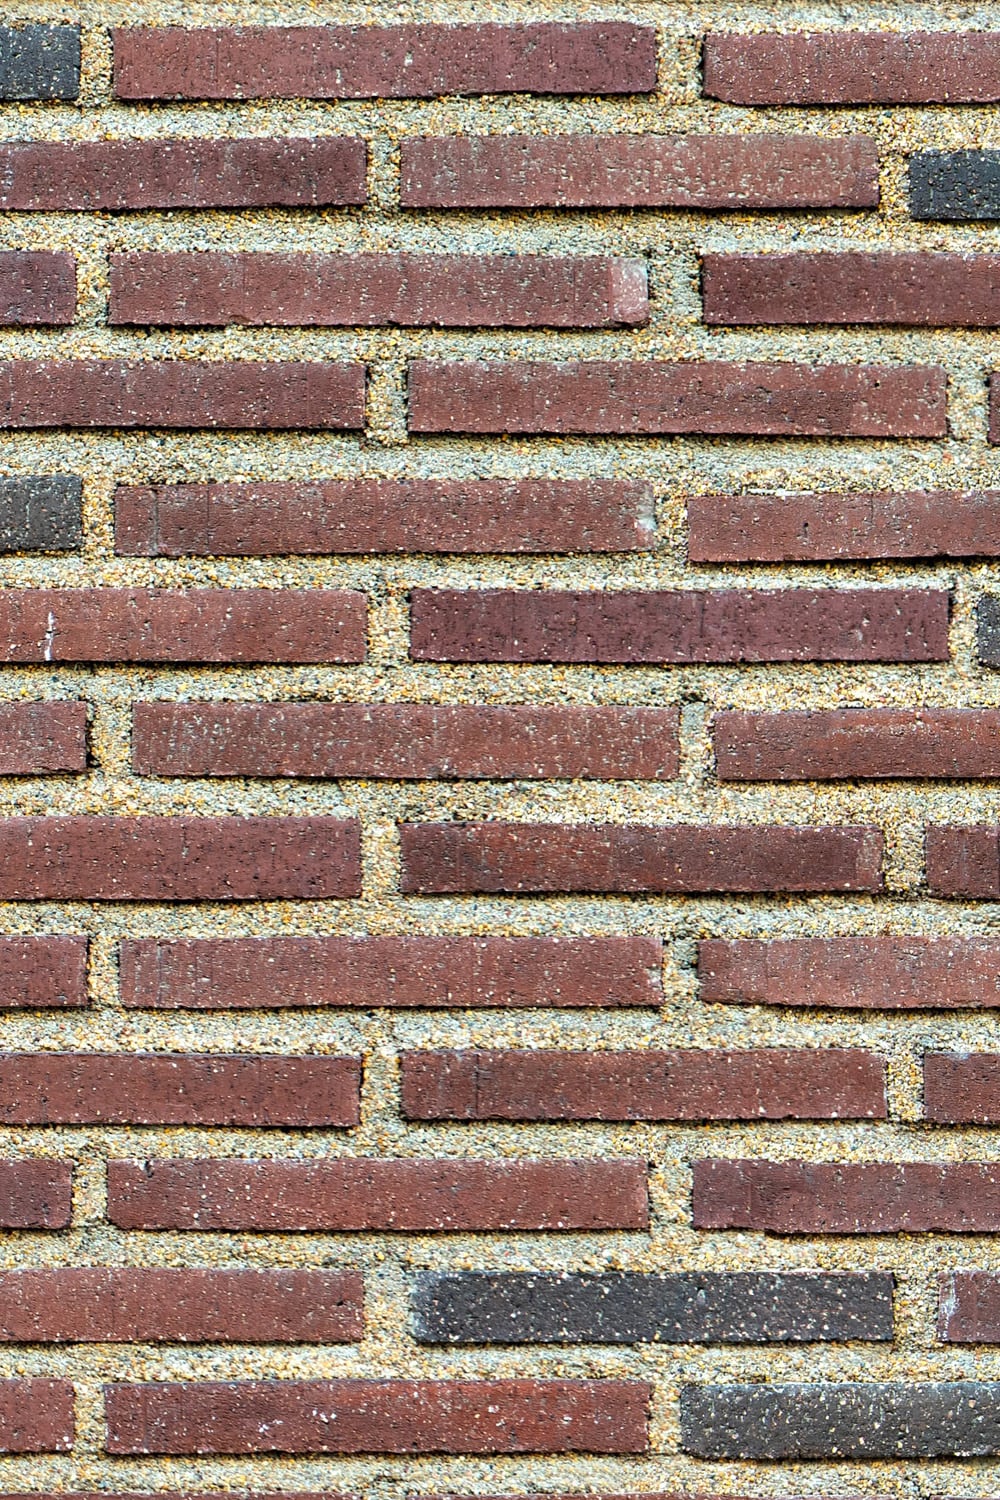 Long decorative red and black brick wall - close-up